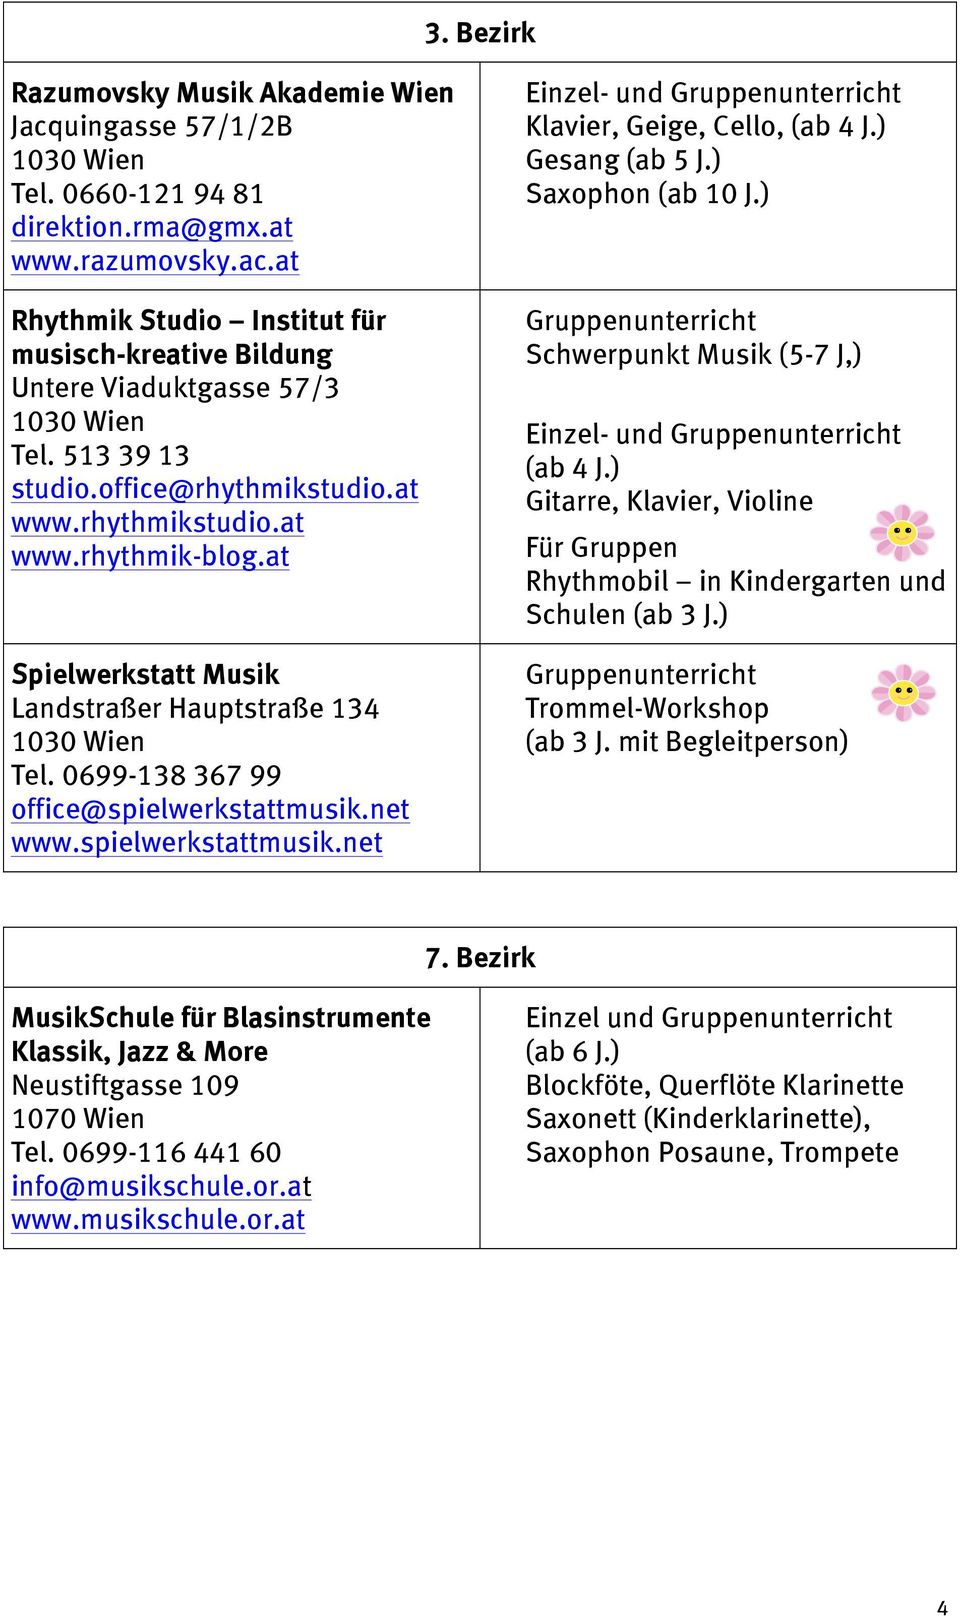 spielwerkstattmusik.net Klavier, Geige, Cello, (ab 4 J.) Gesang (ab 5 J.) Saxophon (ab 10 J.) Gruppenunterricht Schwerpunkt Musik (5-7 J,) (ab 4 J.